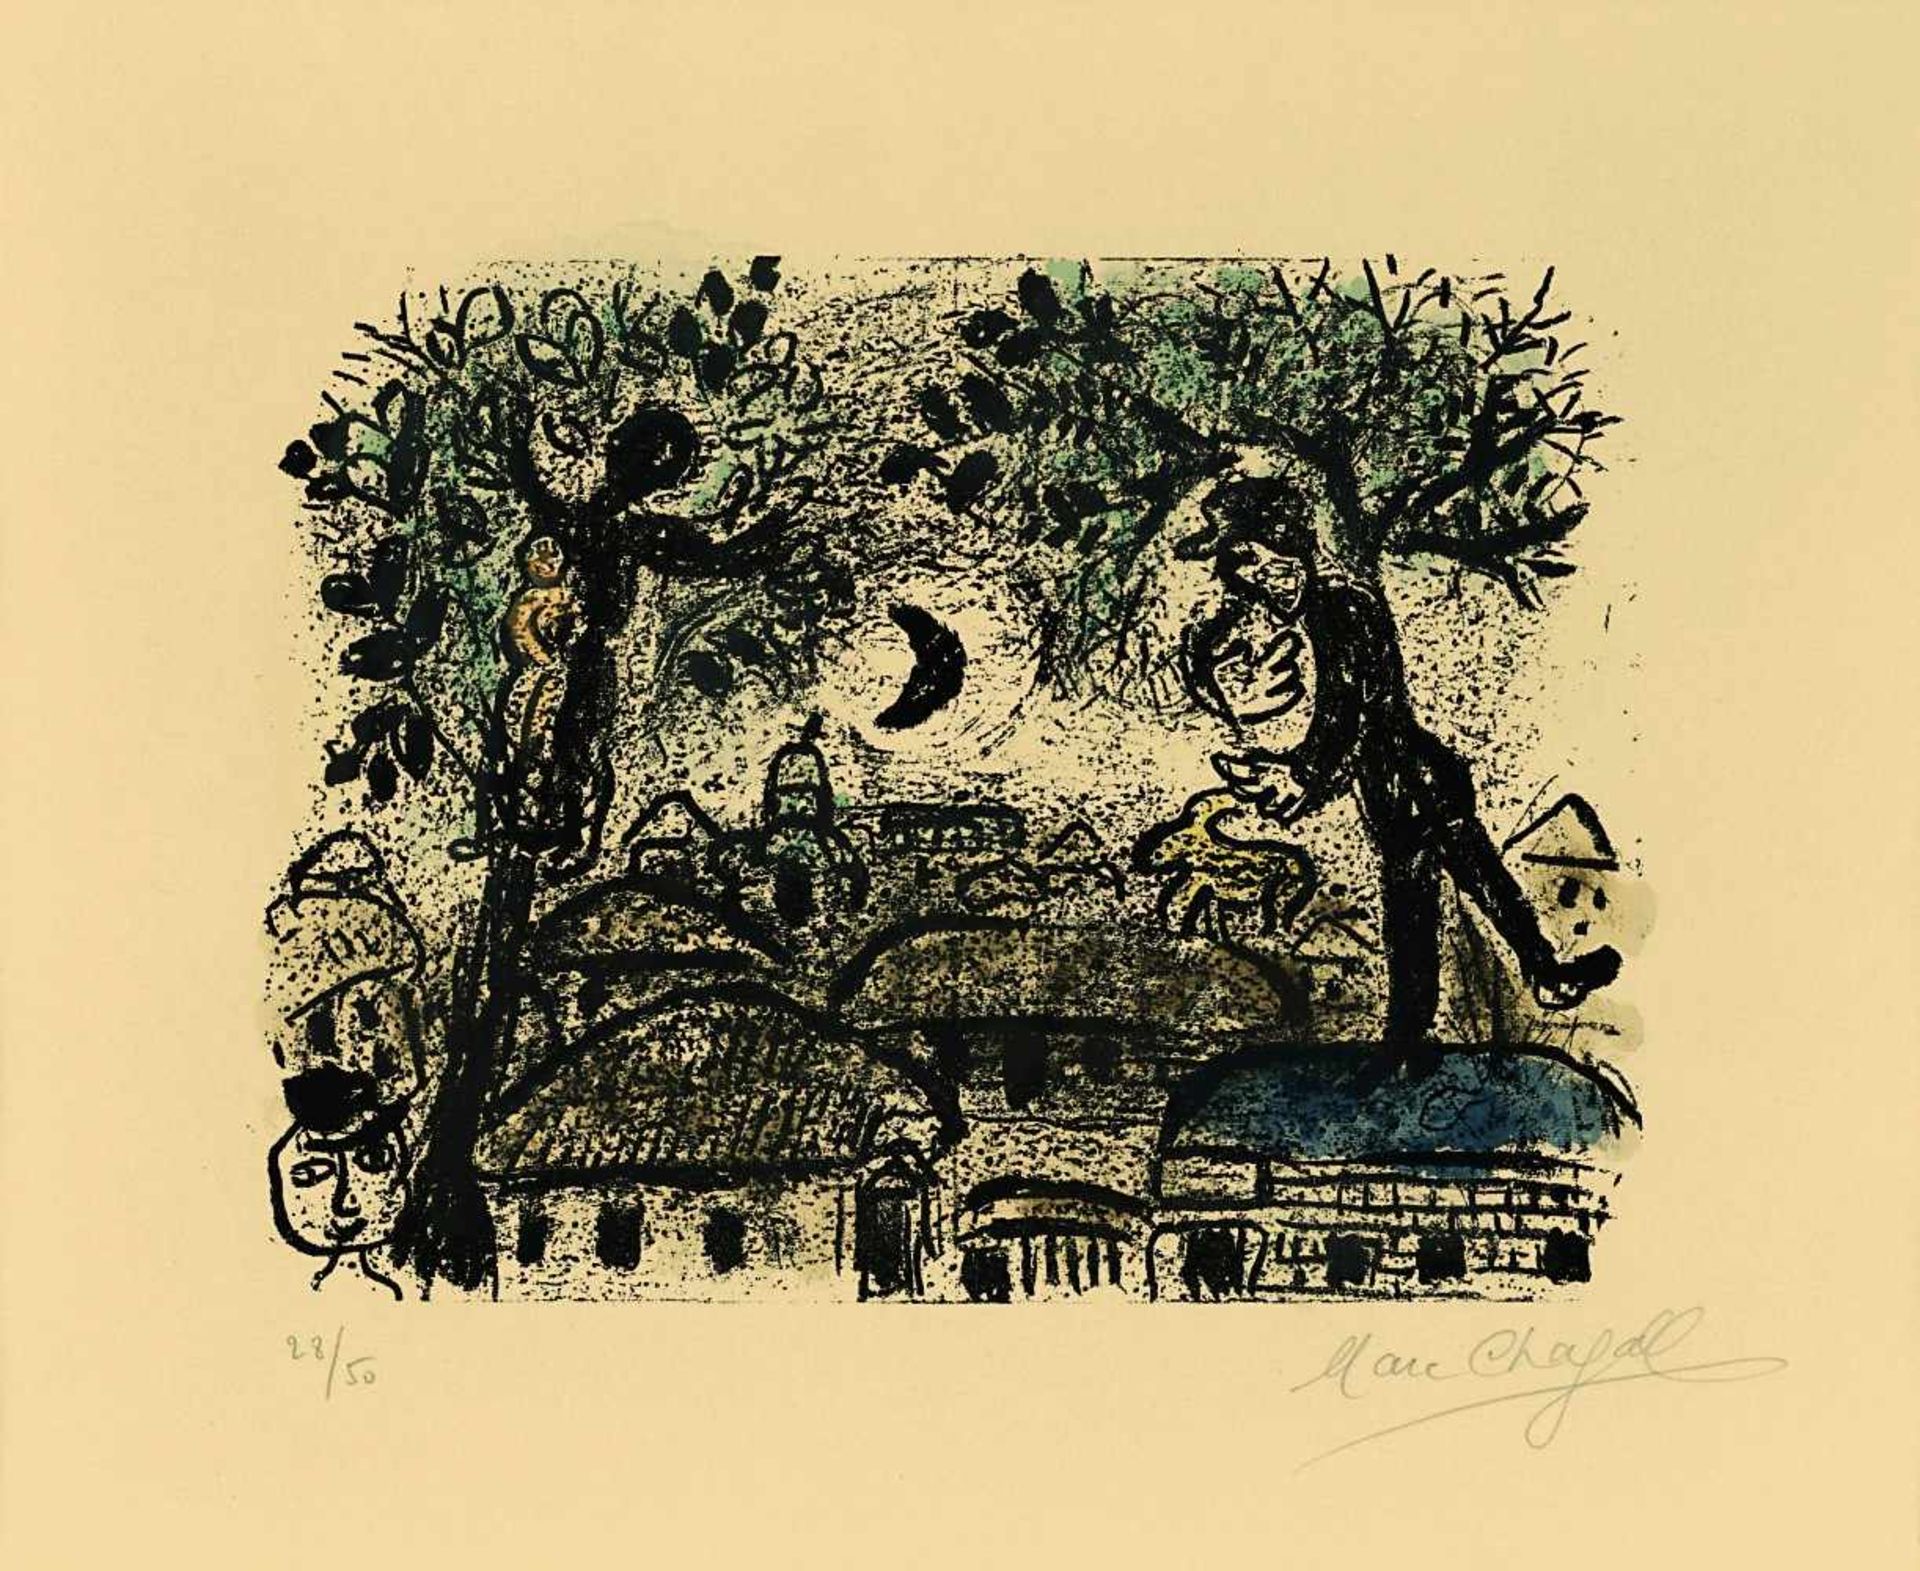 Chagall, Marc1887 Vicebsk - 1985 St-Paul-de-VenceLa lune noir (1965)Farblithographie Stein: ca. 25,4